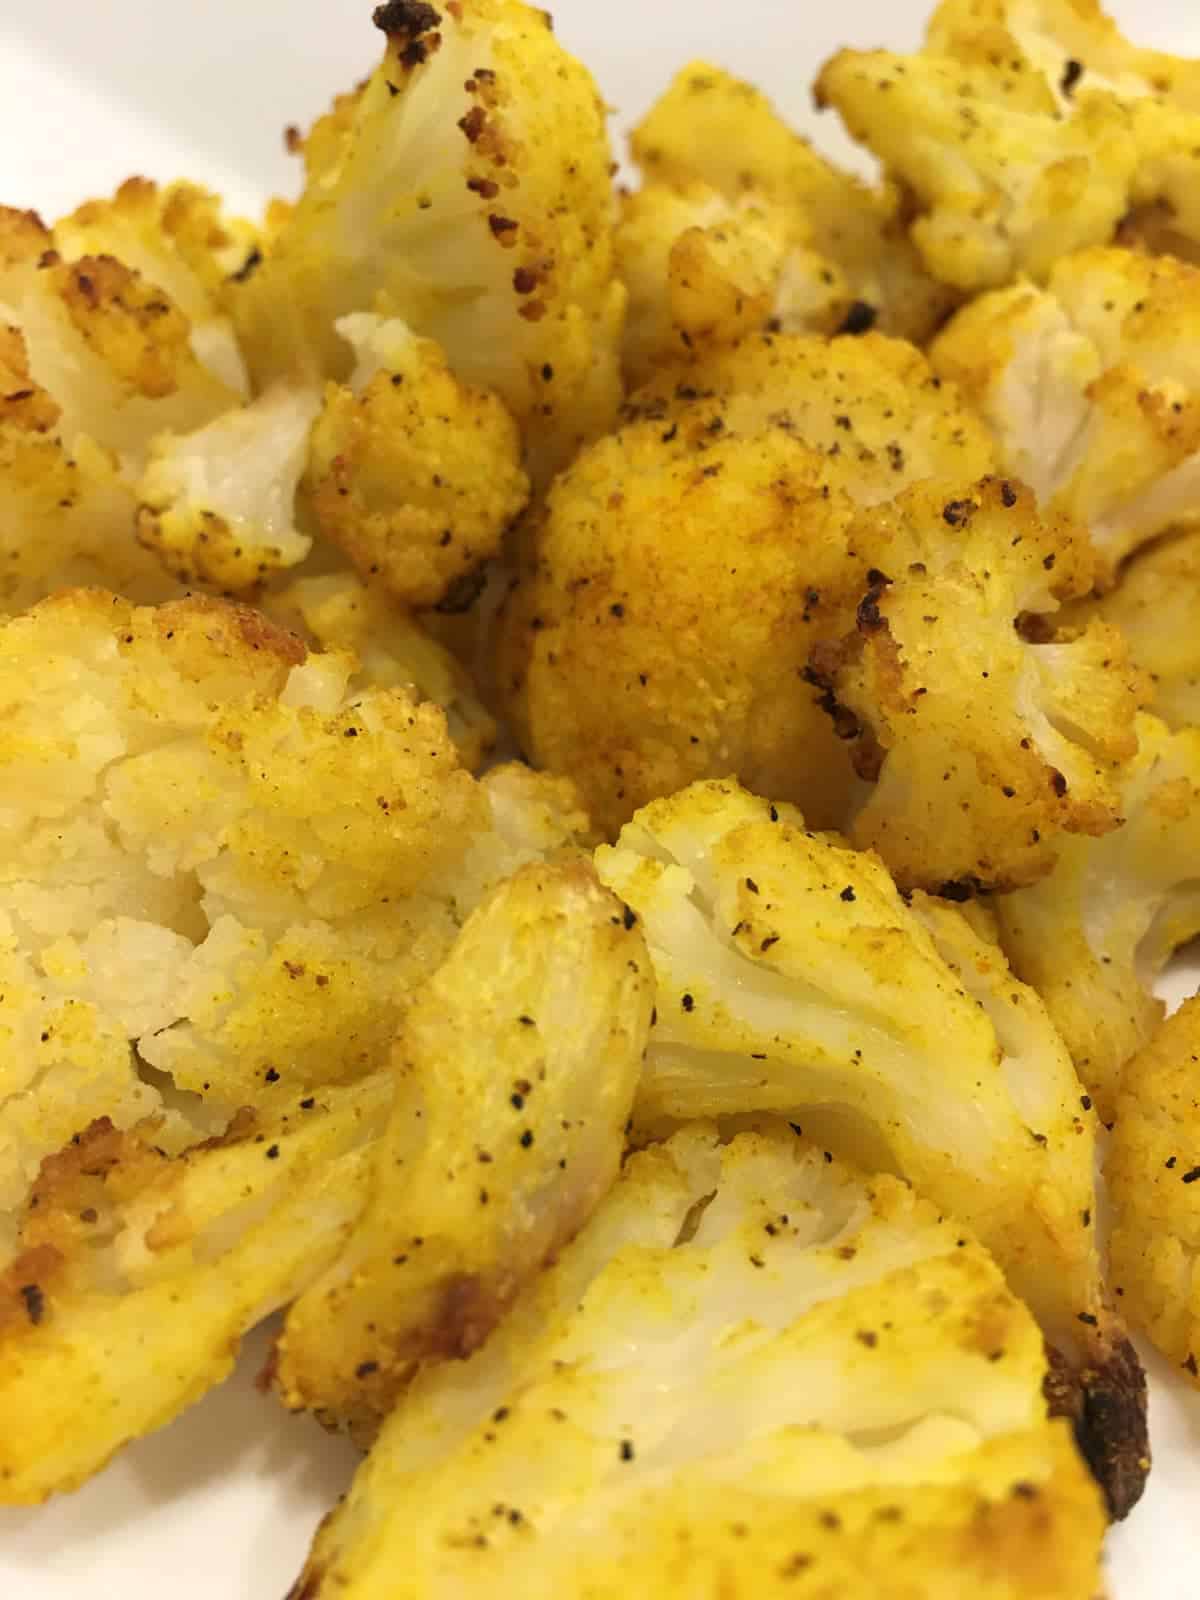 Oven roasted frozen cauliflower florets with turmeric lemon